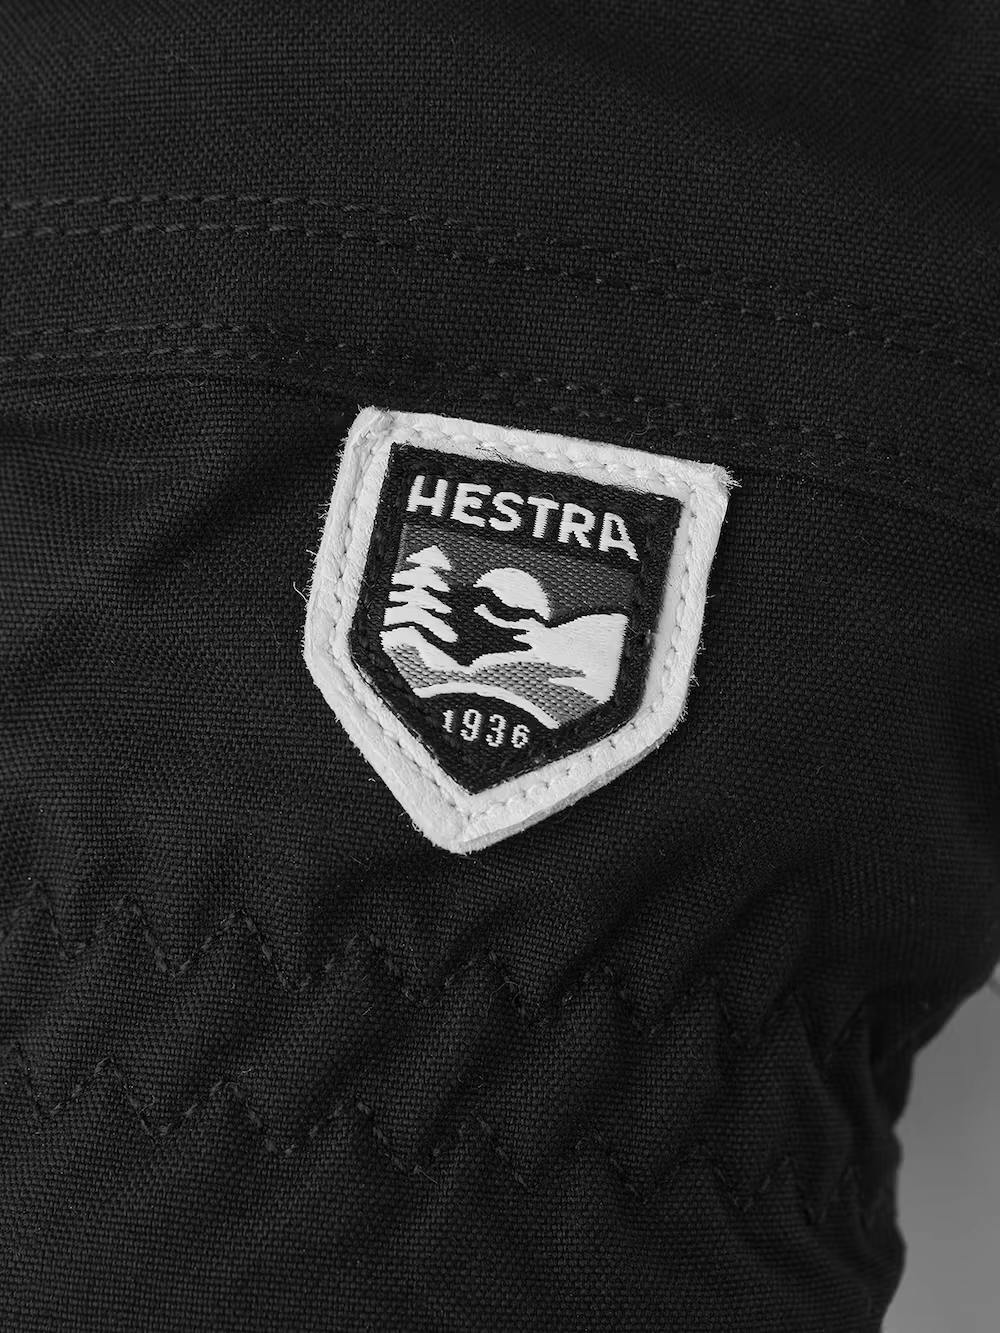 Hestra Women's Heli Ski Gloves